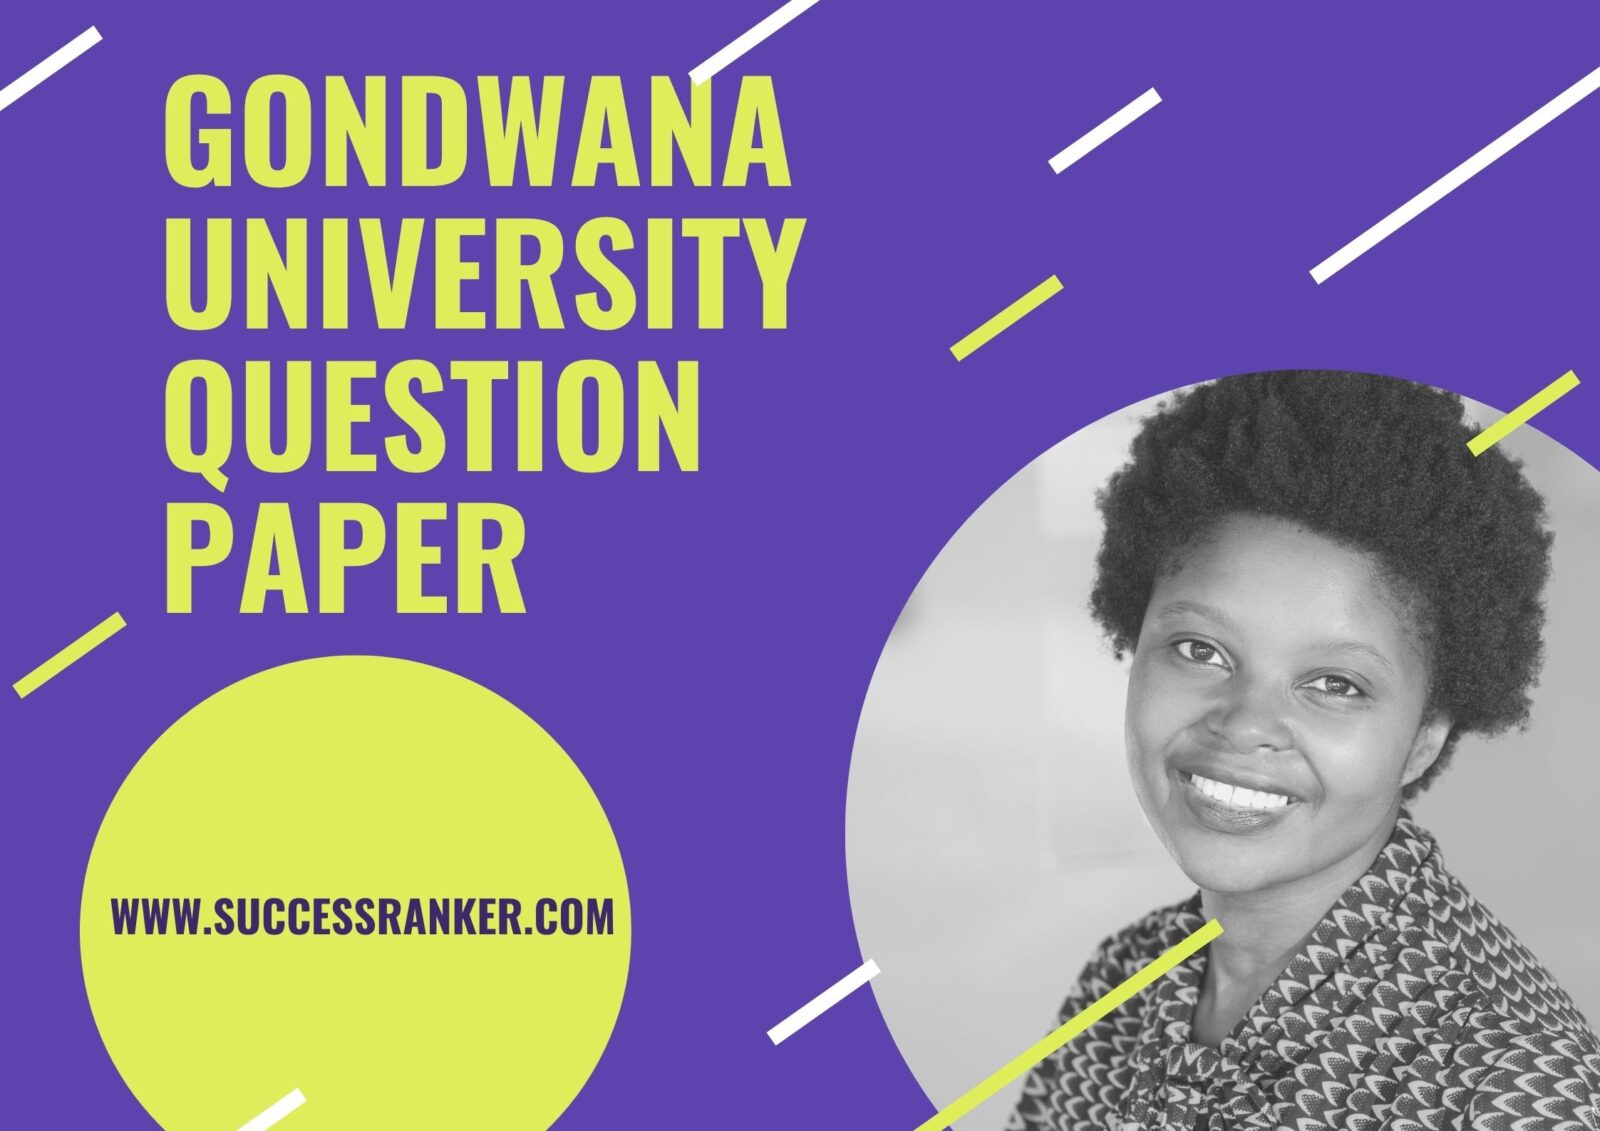 Gondwana University Question Paper